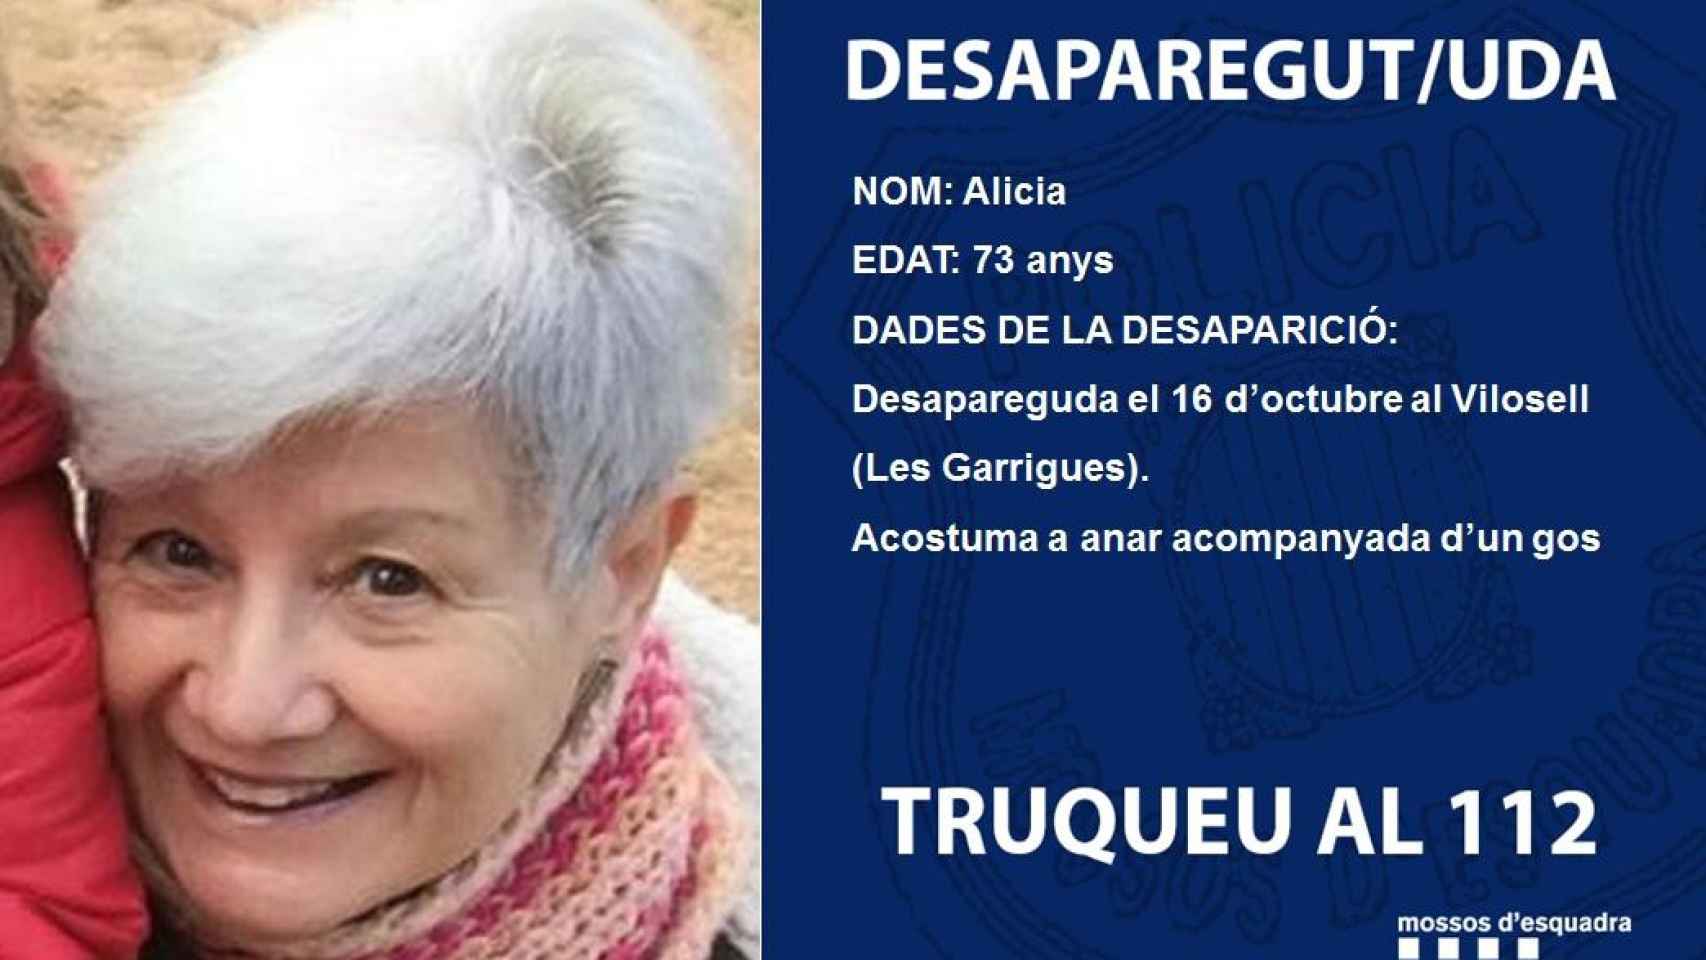 Aviso de los Mossos d'Esquadra sobre la desaparición de la madre de Jaume Collboni / @mossos (TWITTER)